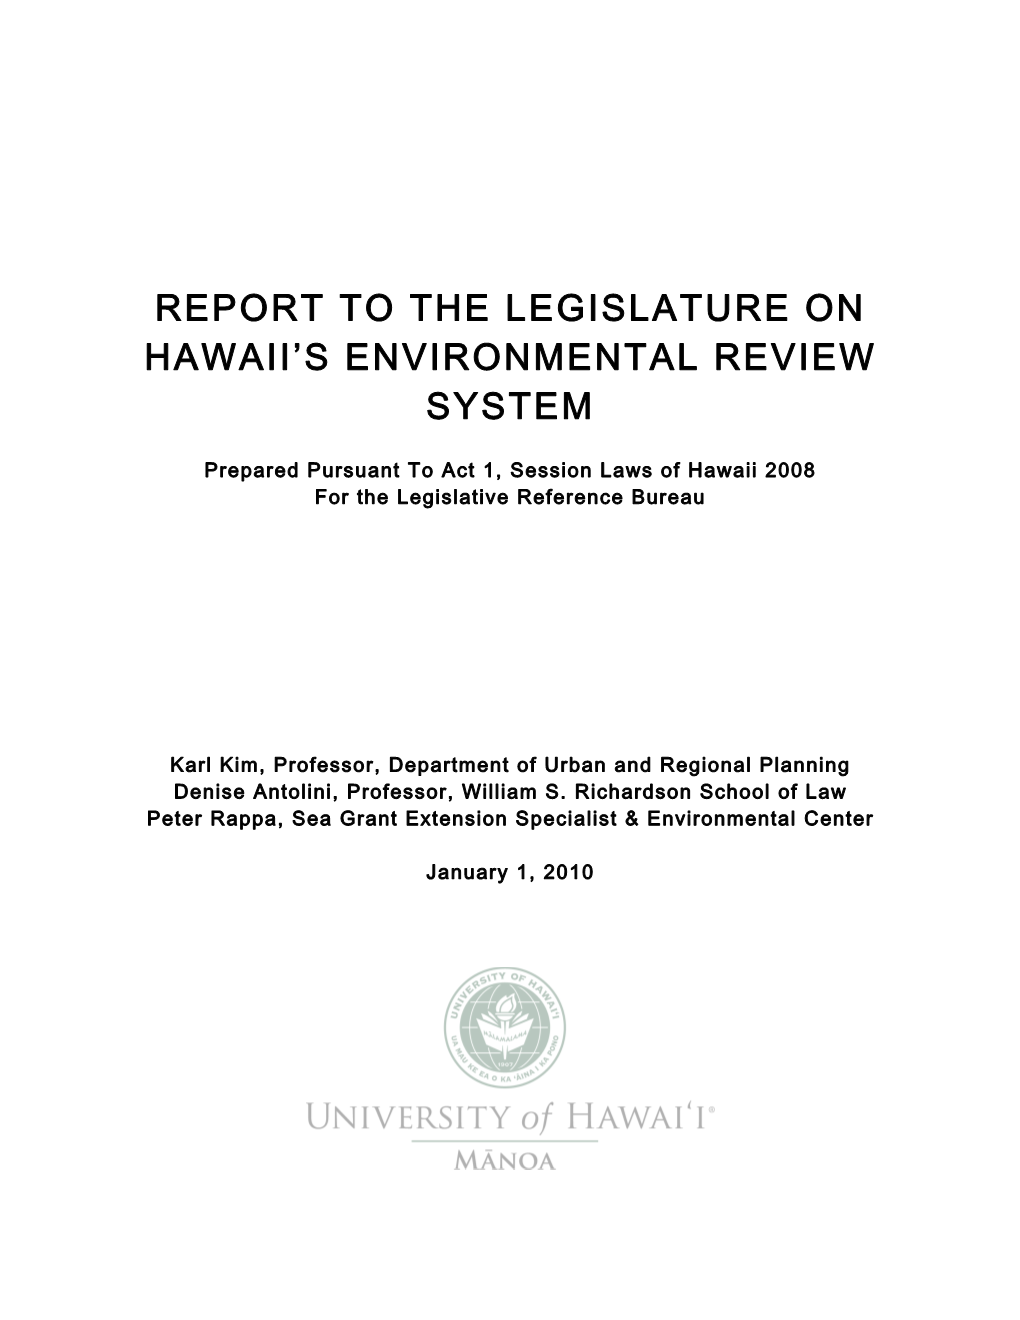 Report to the Legislature on Hawaii's